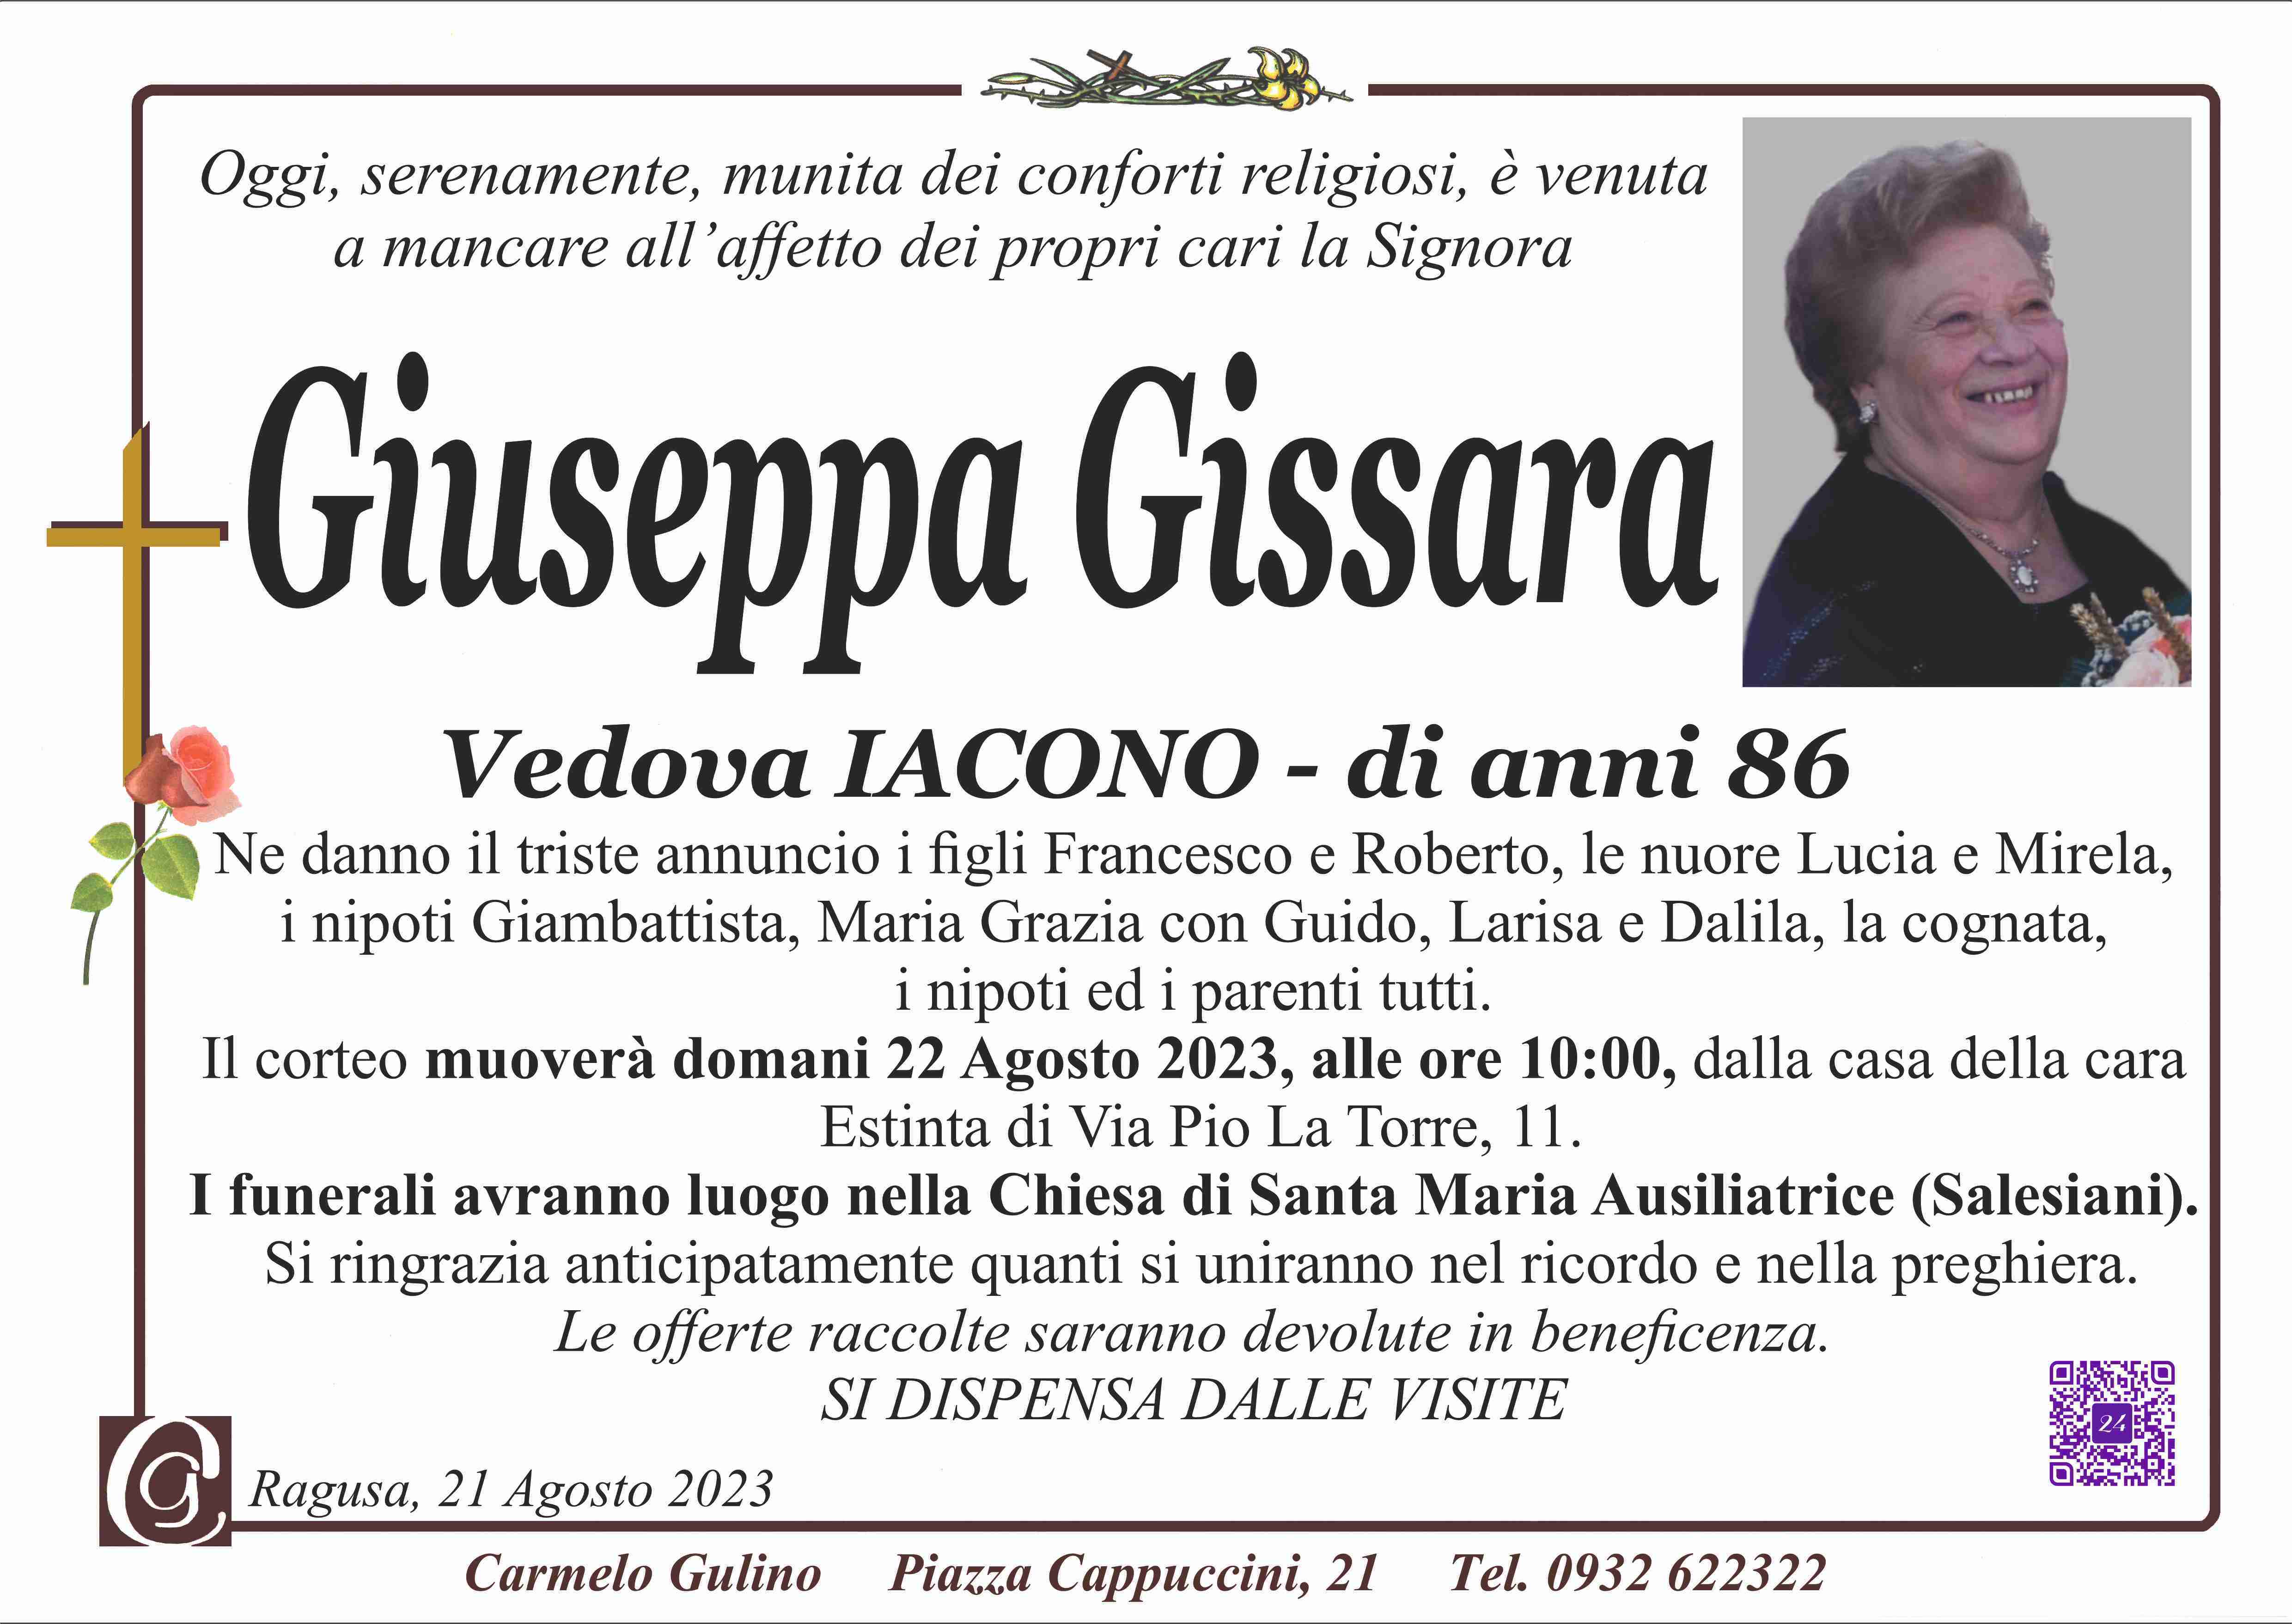 Giuseppa Gissara